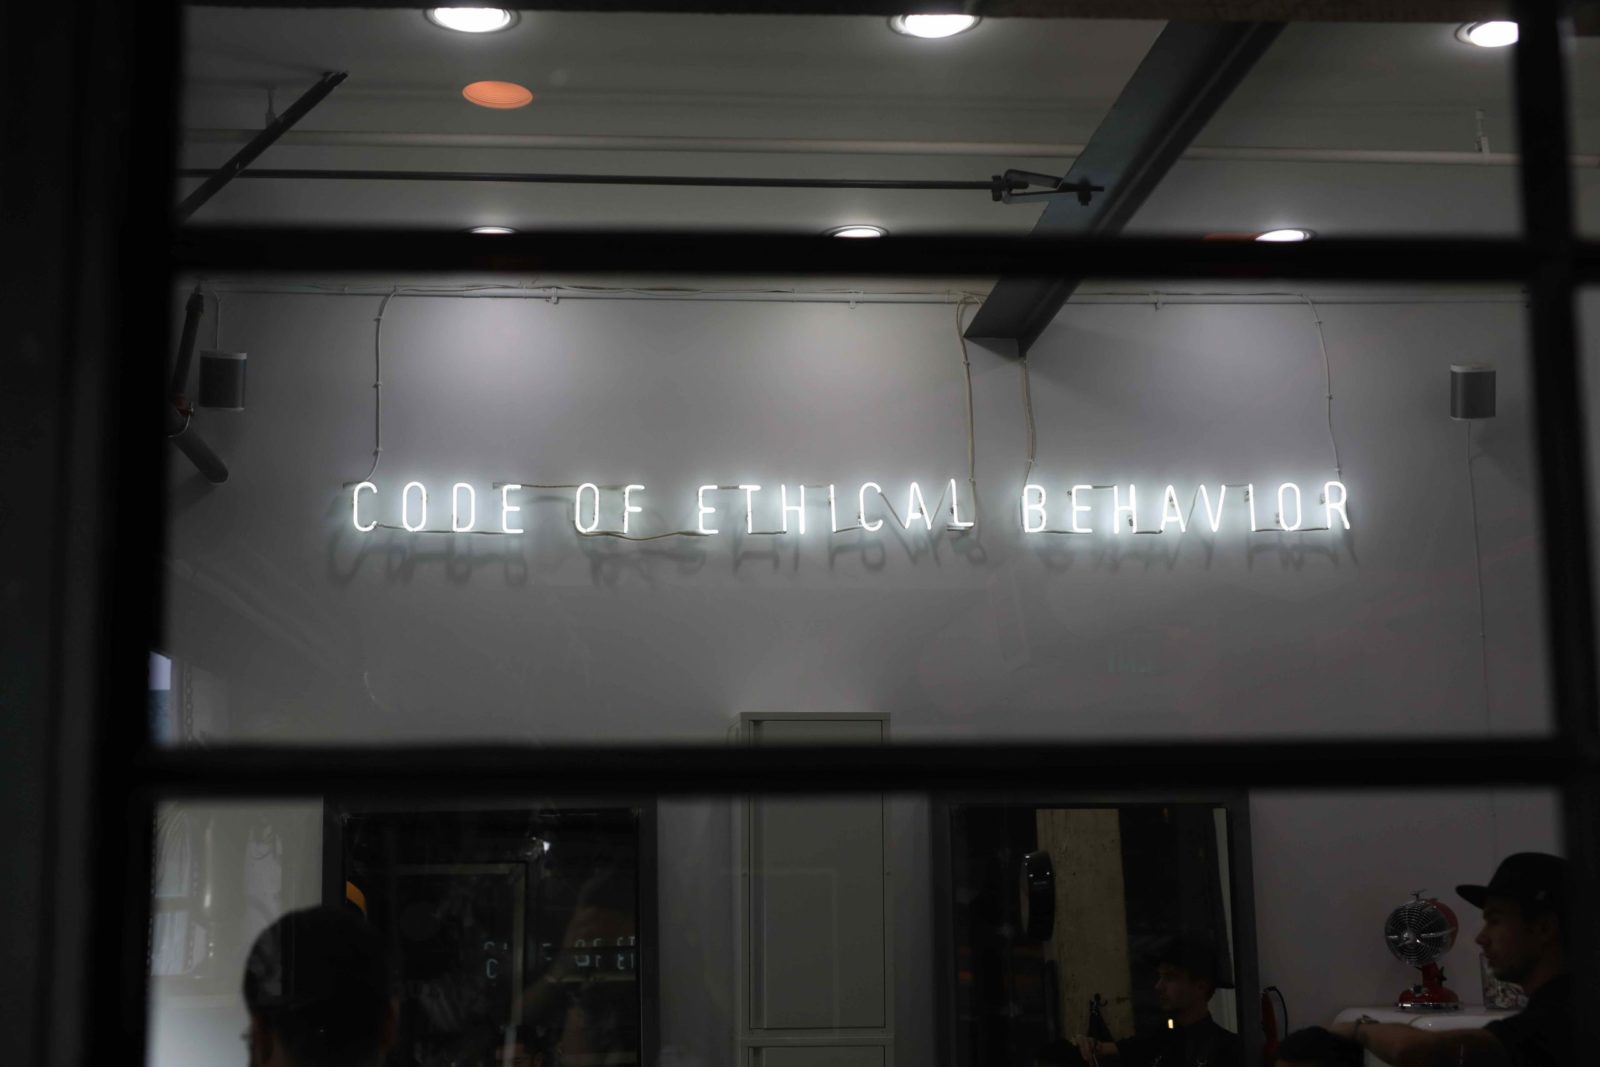 Code of Ethics neon sign